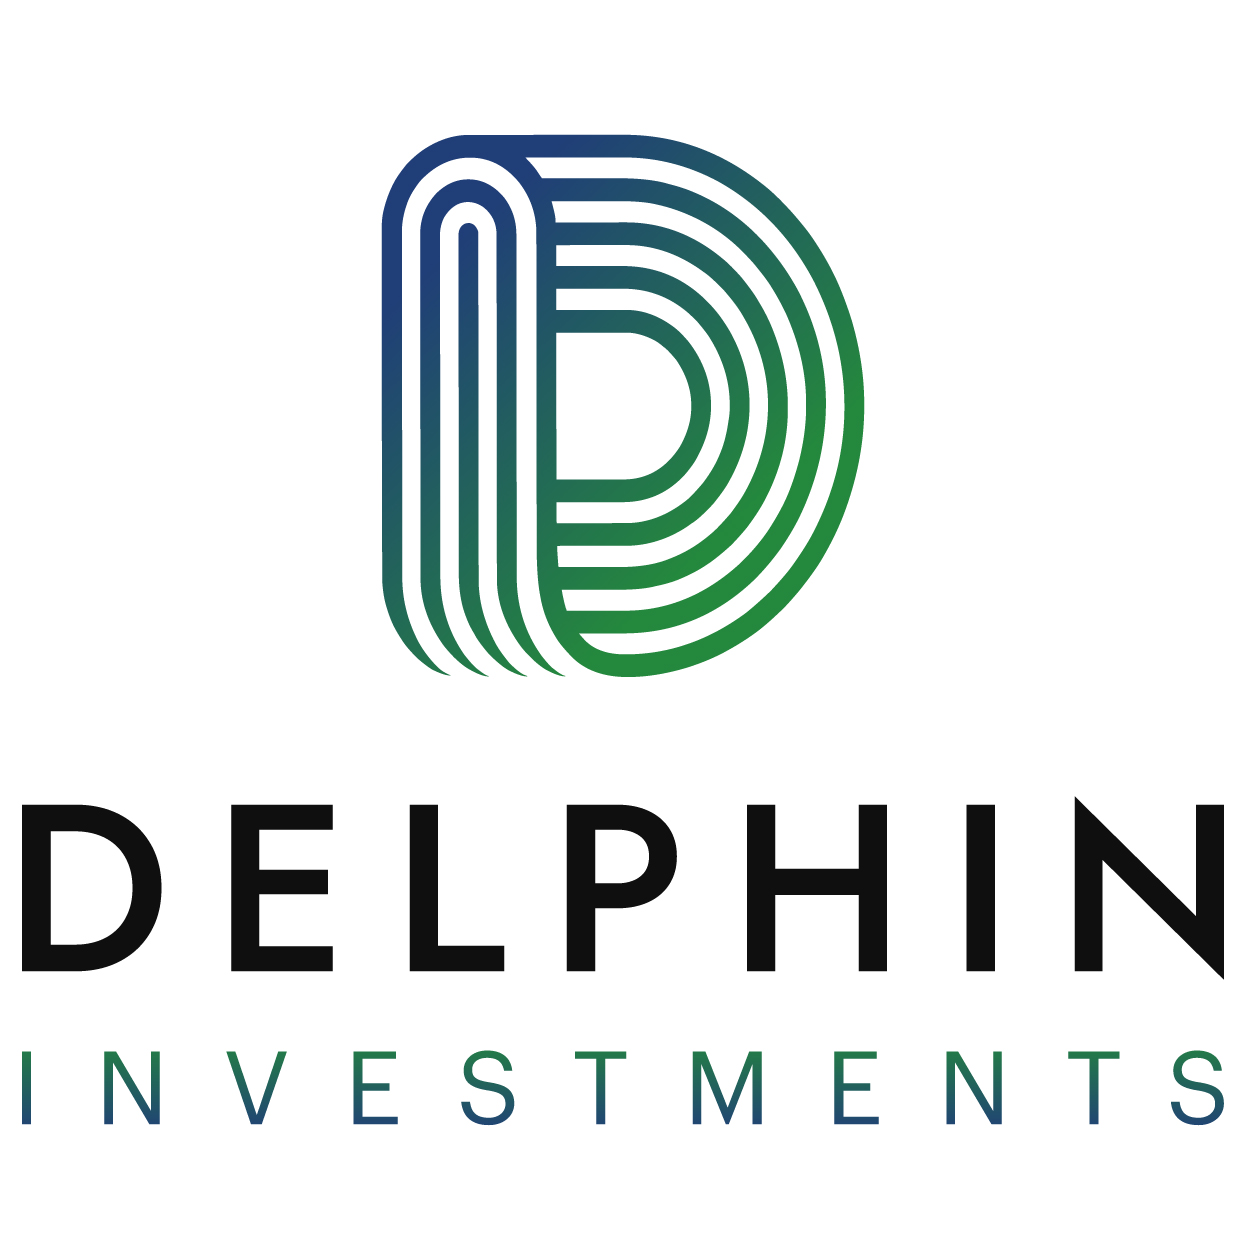 delphin logo